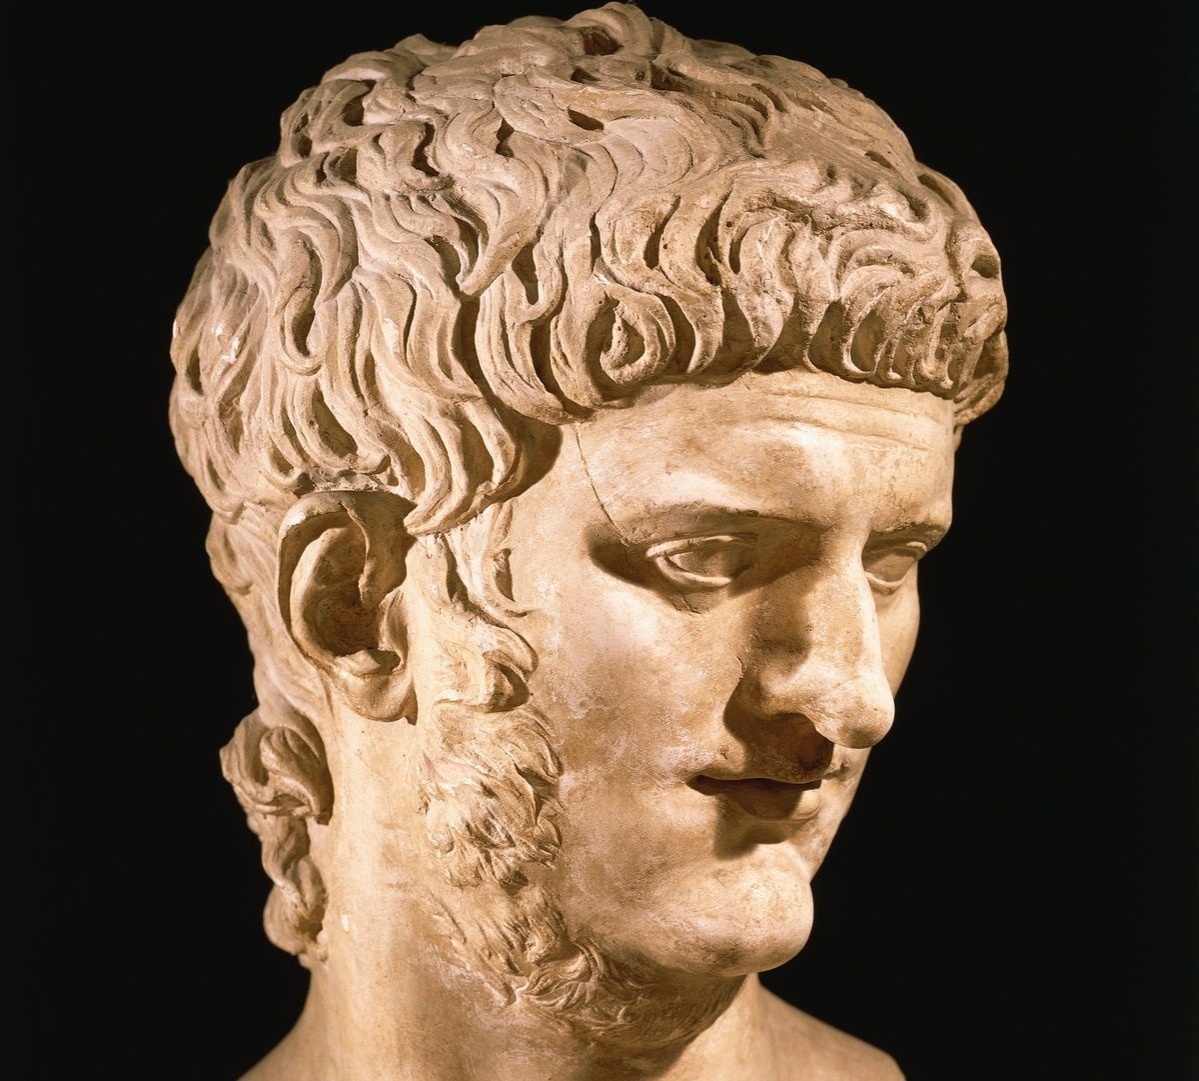 Emperor Nero sculpture